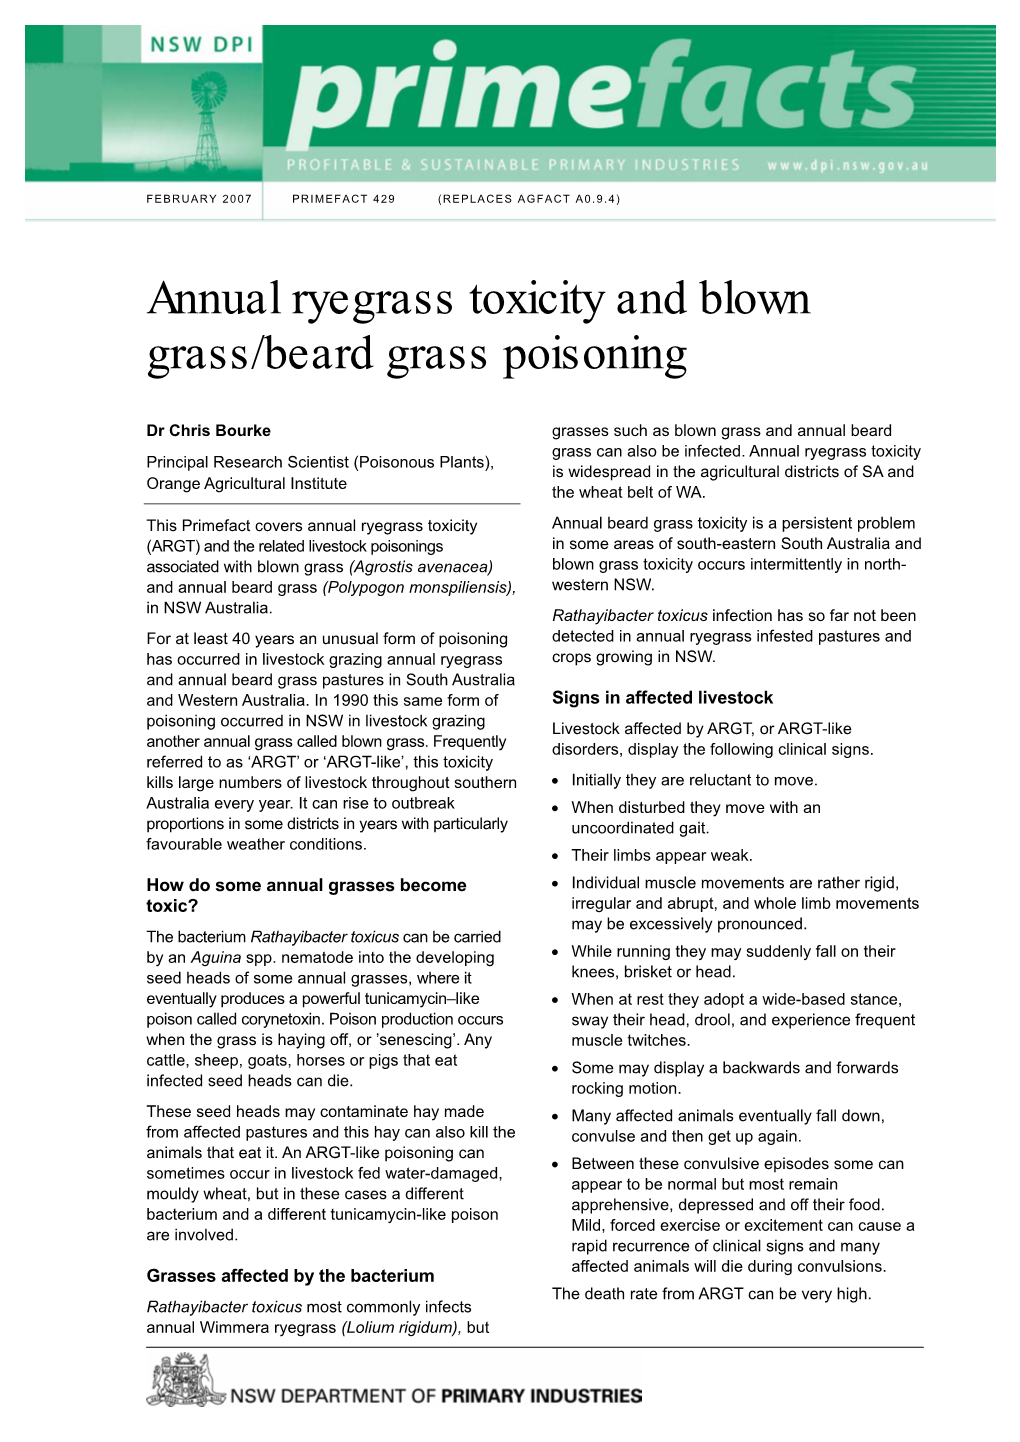 Annual Ryegrass Toxicity and Blown Grass/Beard Grass Poisoning